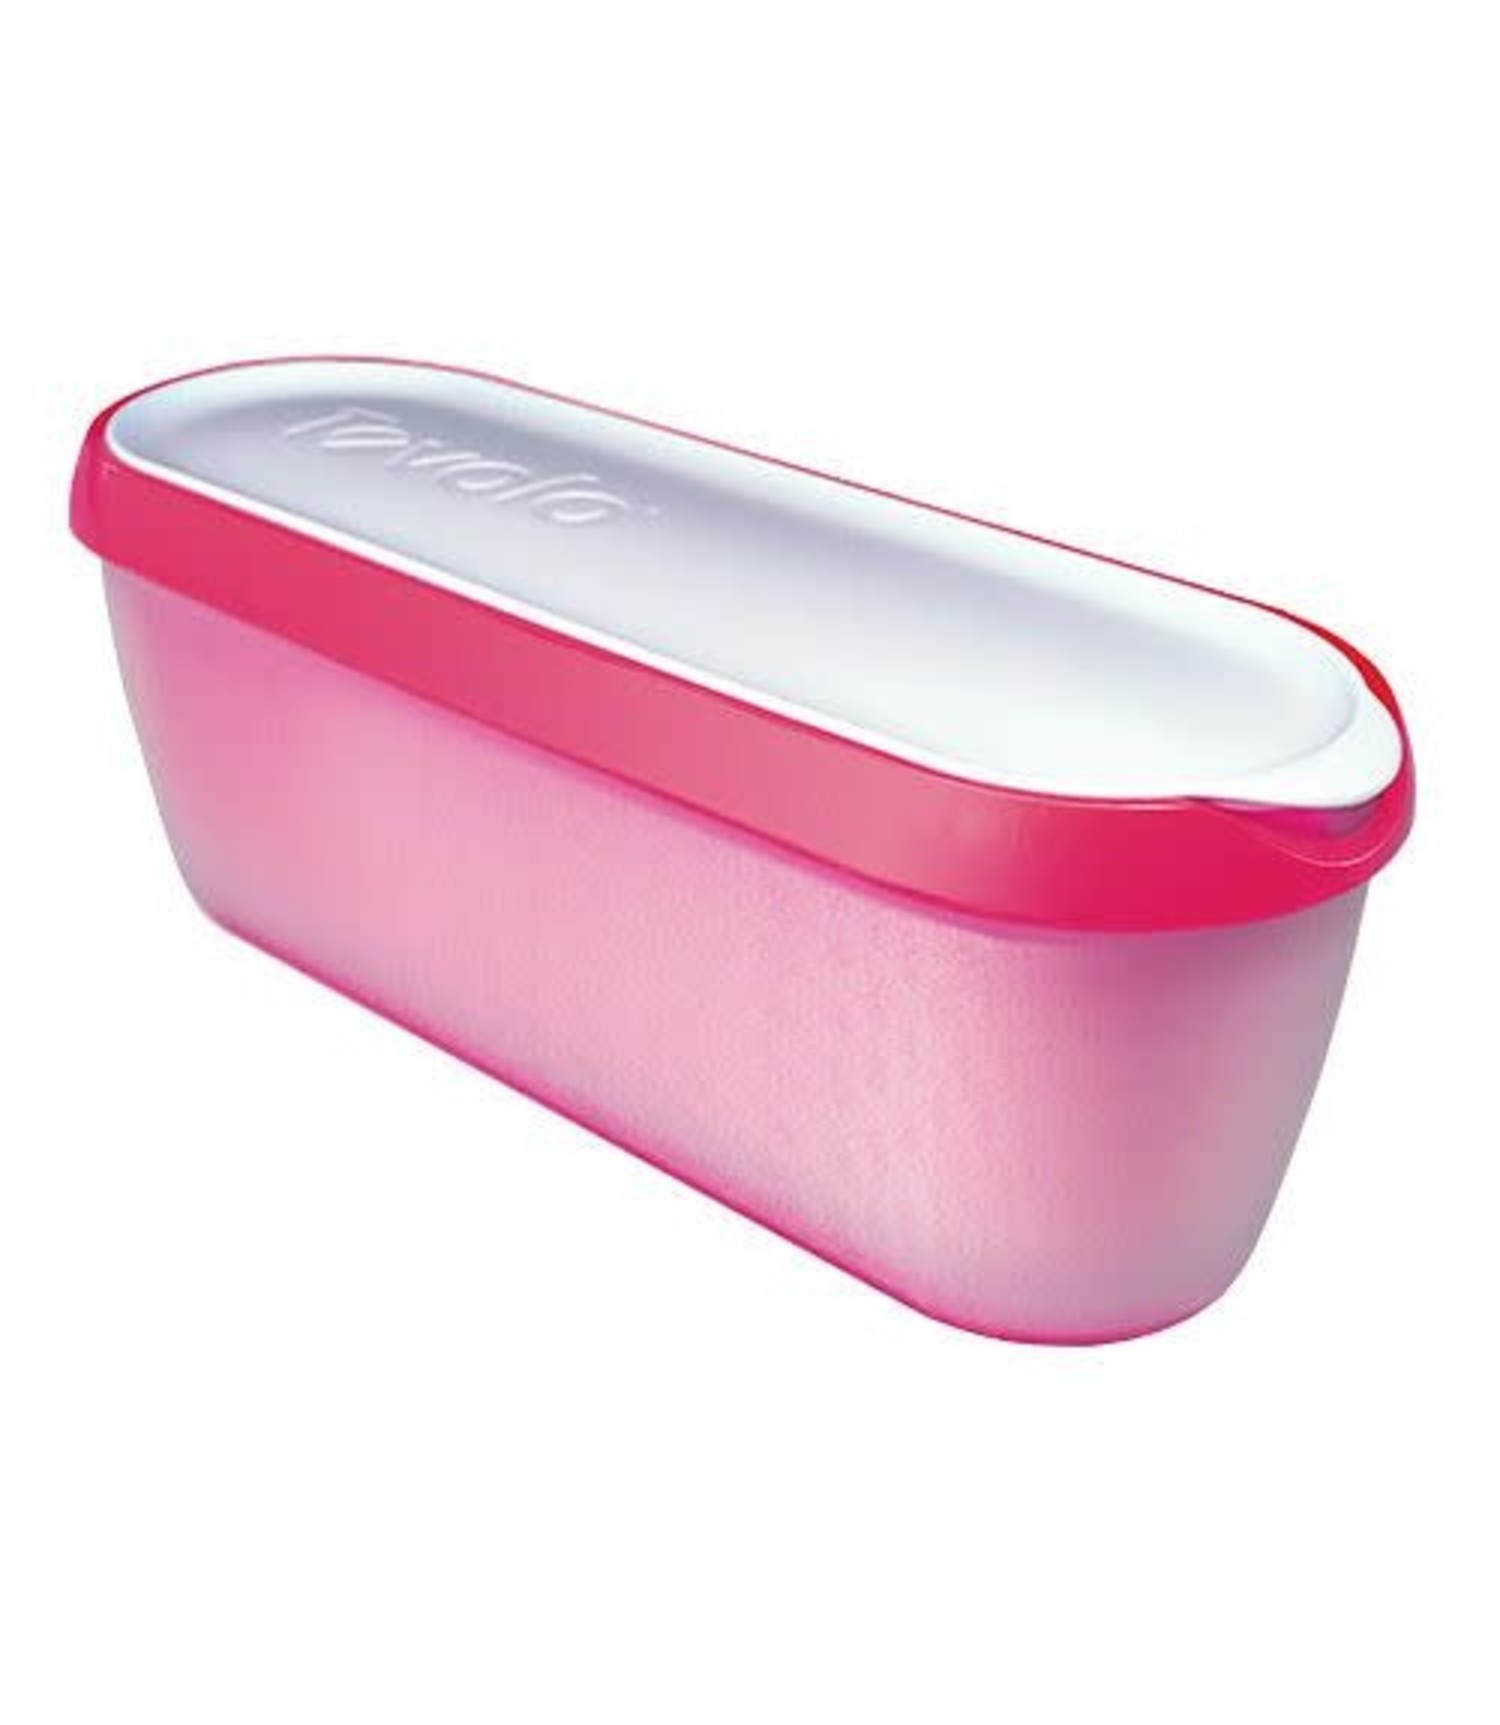 https://cdn.shoplightspeed.com/shops/633447/files/20001020/1500x4000x3/tovolo-15-quart-strawberry-pink-ice-cream-storage.jpg